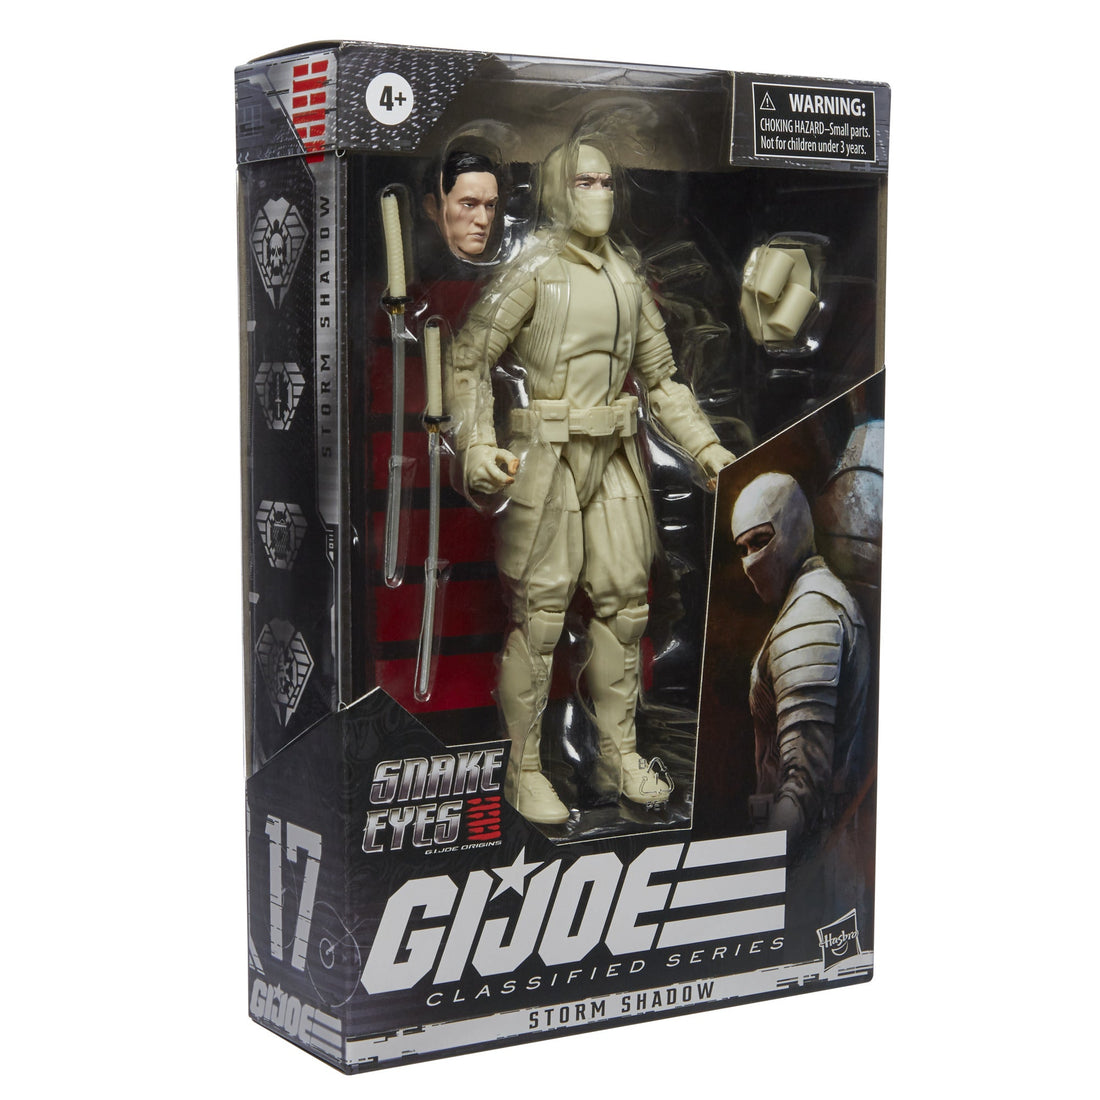 G.I. Joe Classified Series Snake Eyes: GI Joe origins Storm Shadow Action Figure